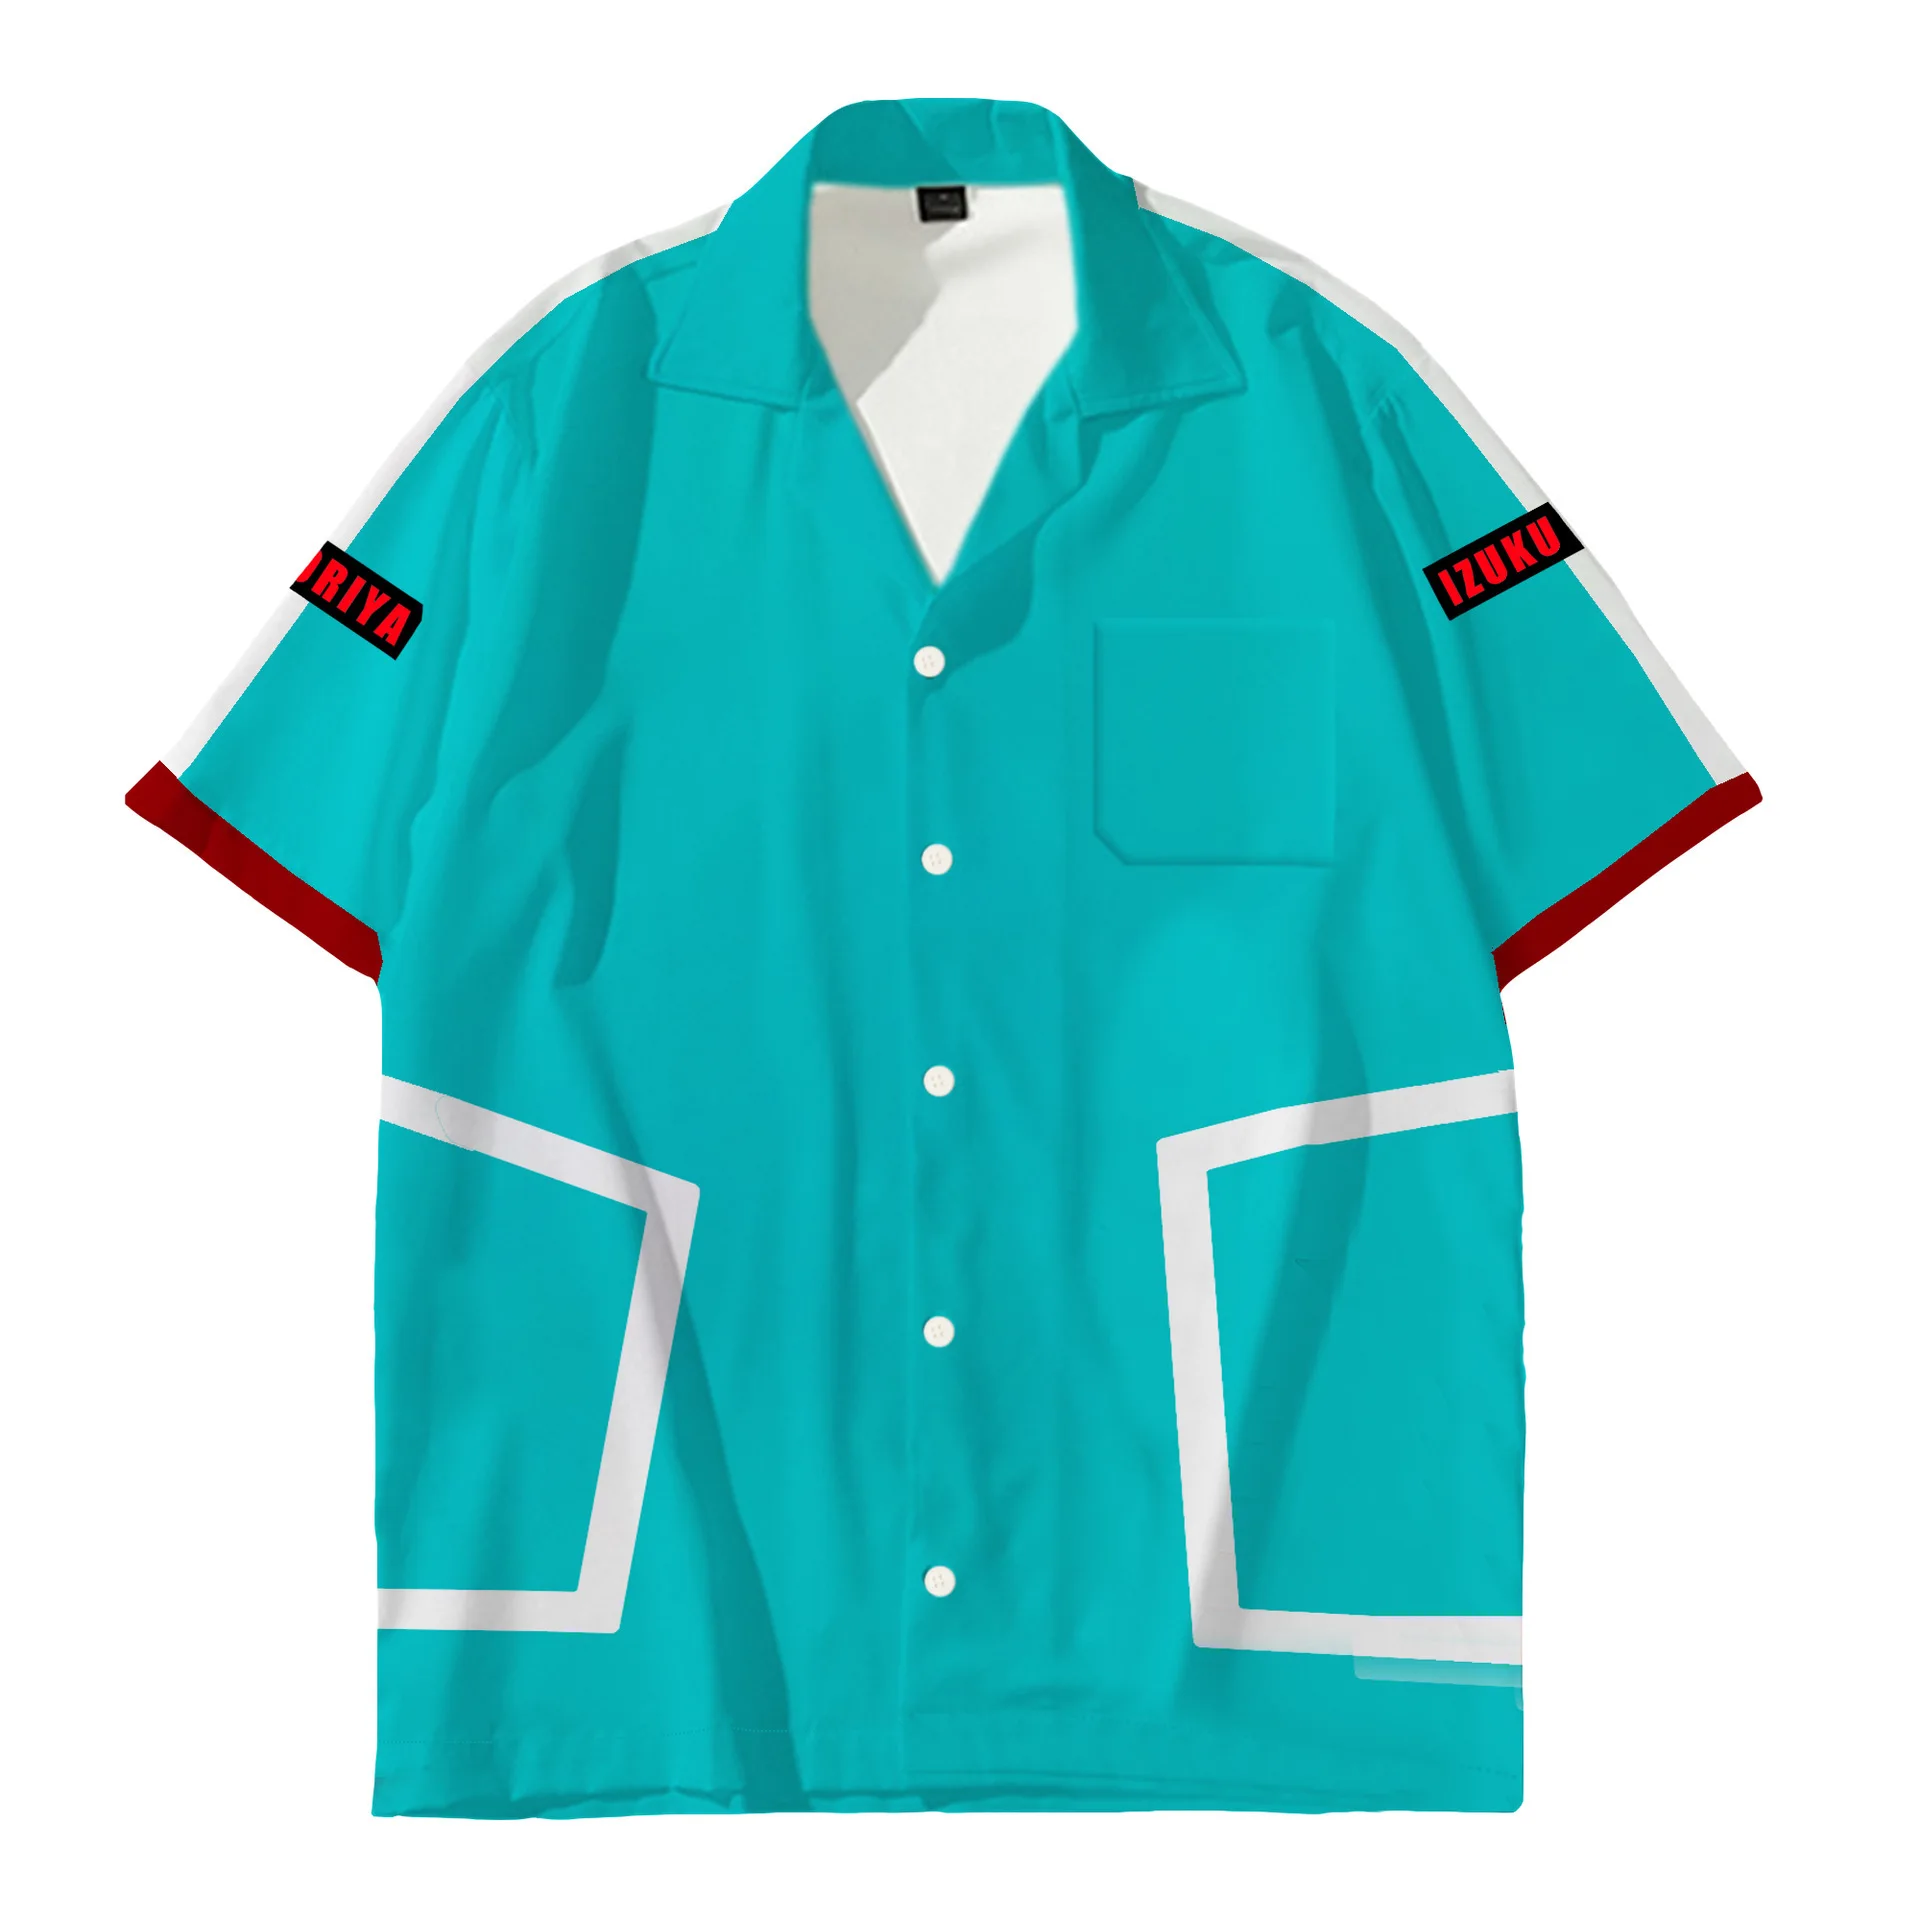 New Kami-tachi ni Hirowareta Otoko Cosplay T-shirt Ryoma t-shirt terylene  short sleeve Summer Tops Tees - AliExpress